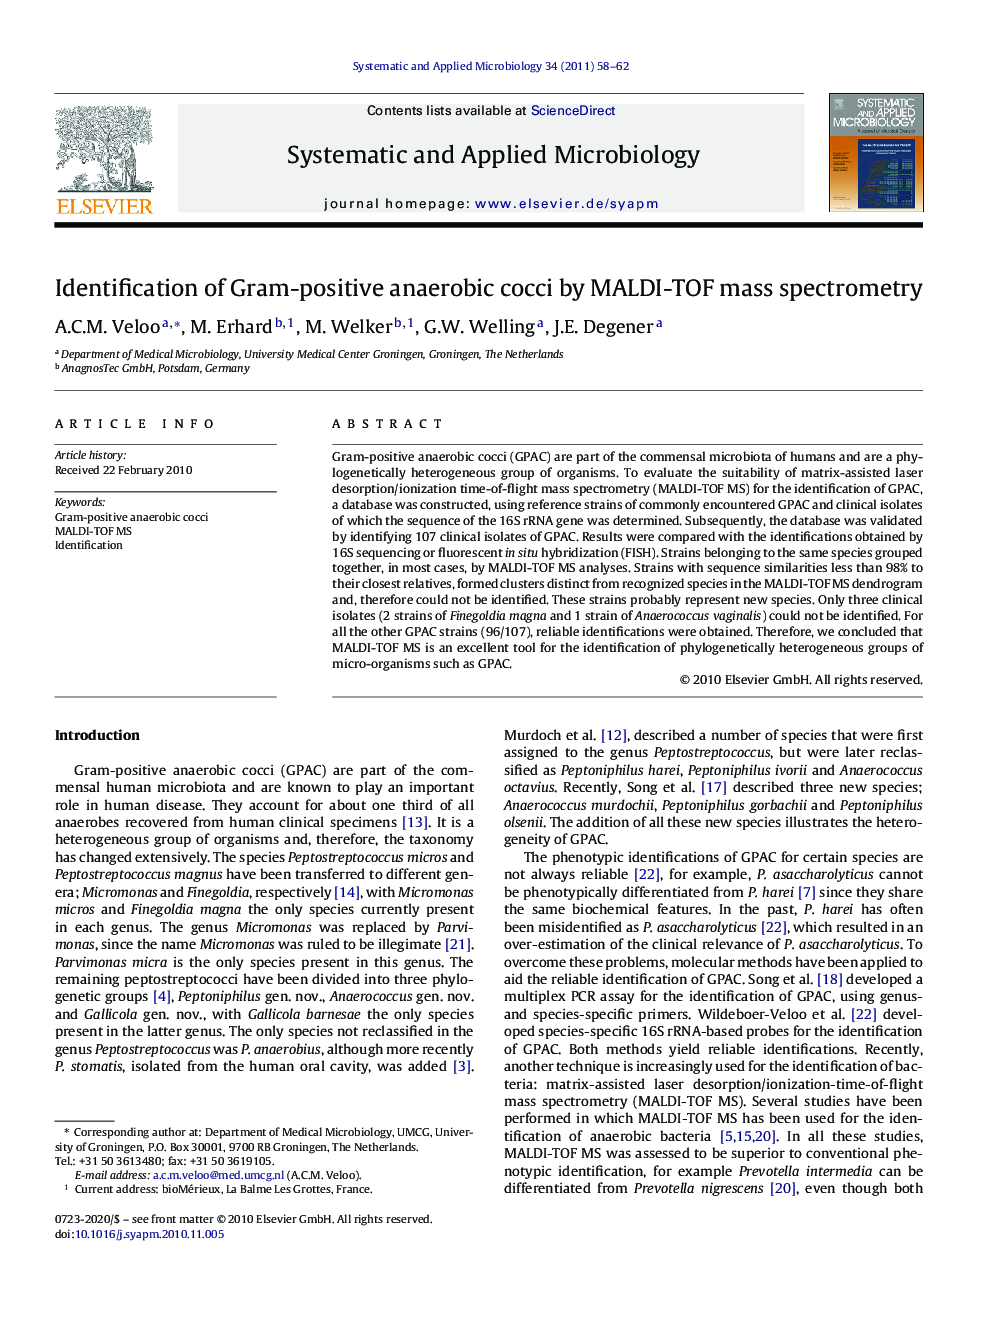 Identification of Gram-positive anaerobic cocci by MALDI-TOF mass spectrometry